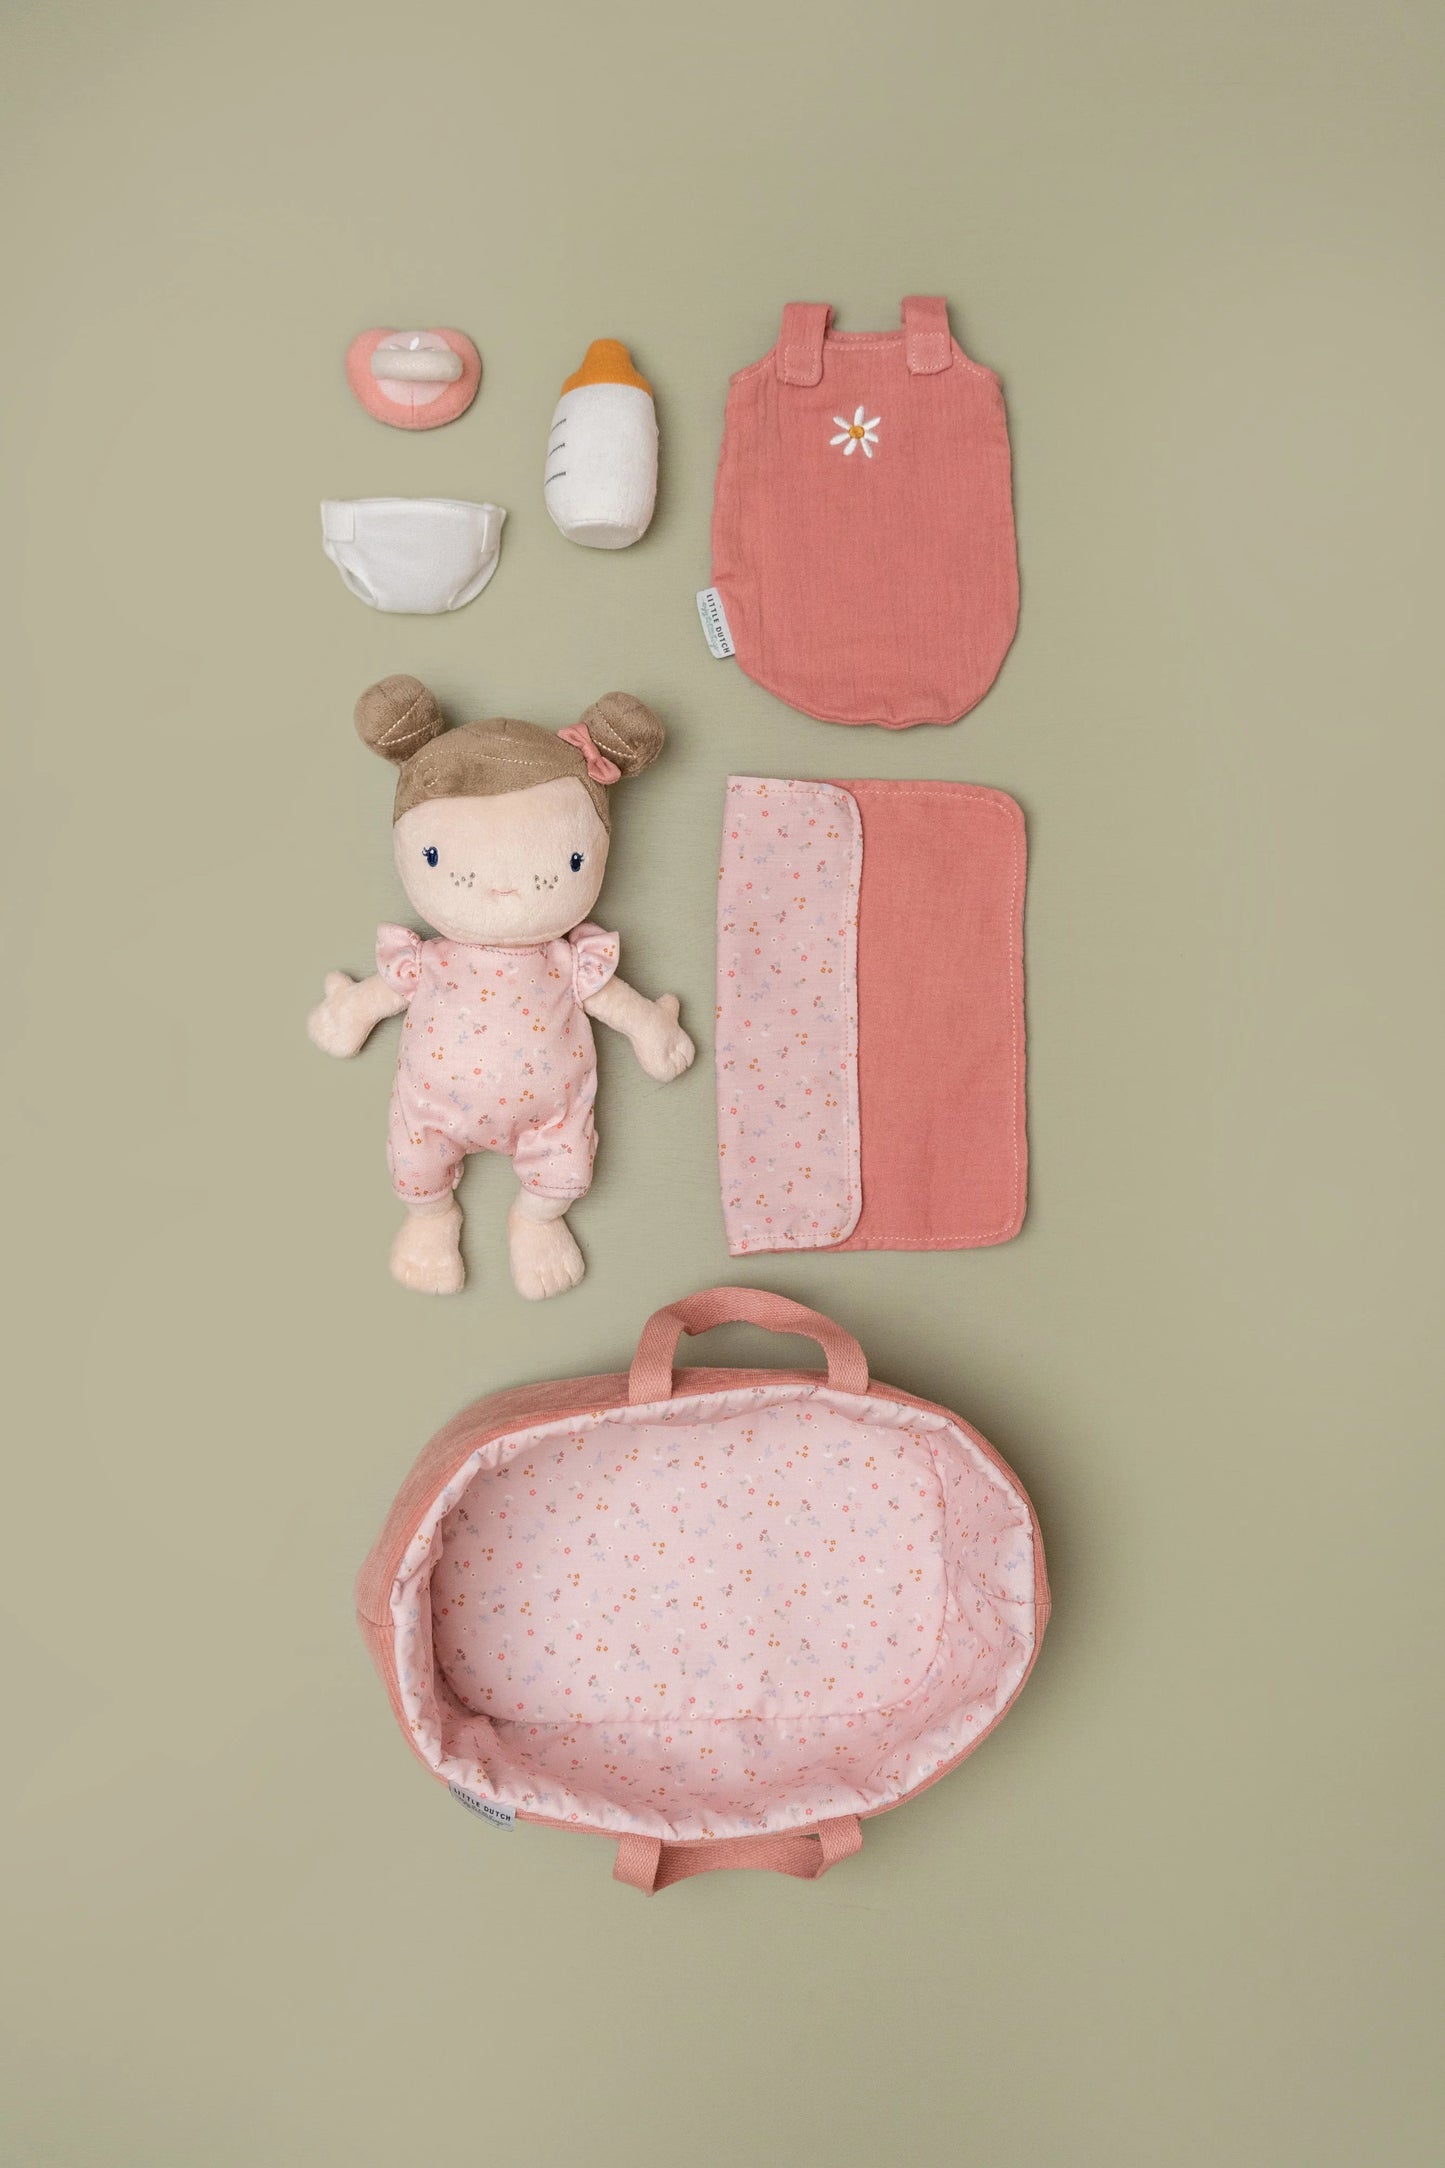 Little Dutch Baby Rosa Doll Set UPDATED DESIGN